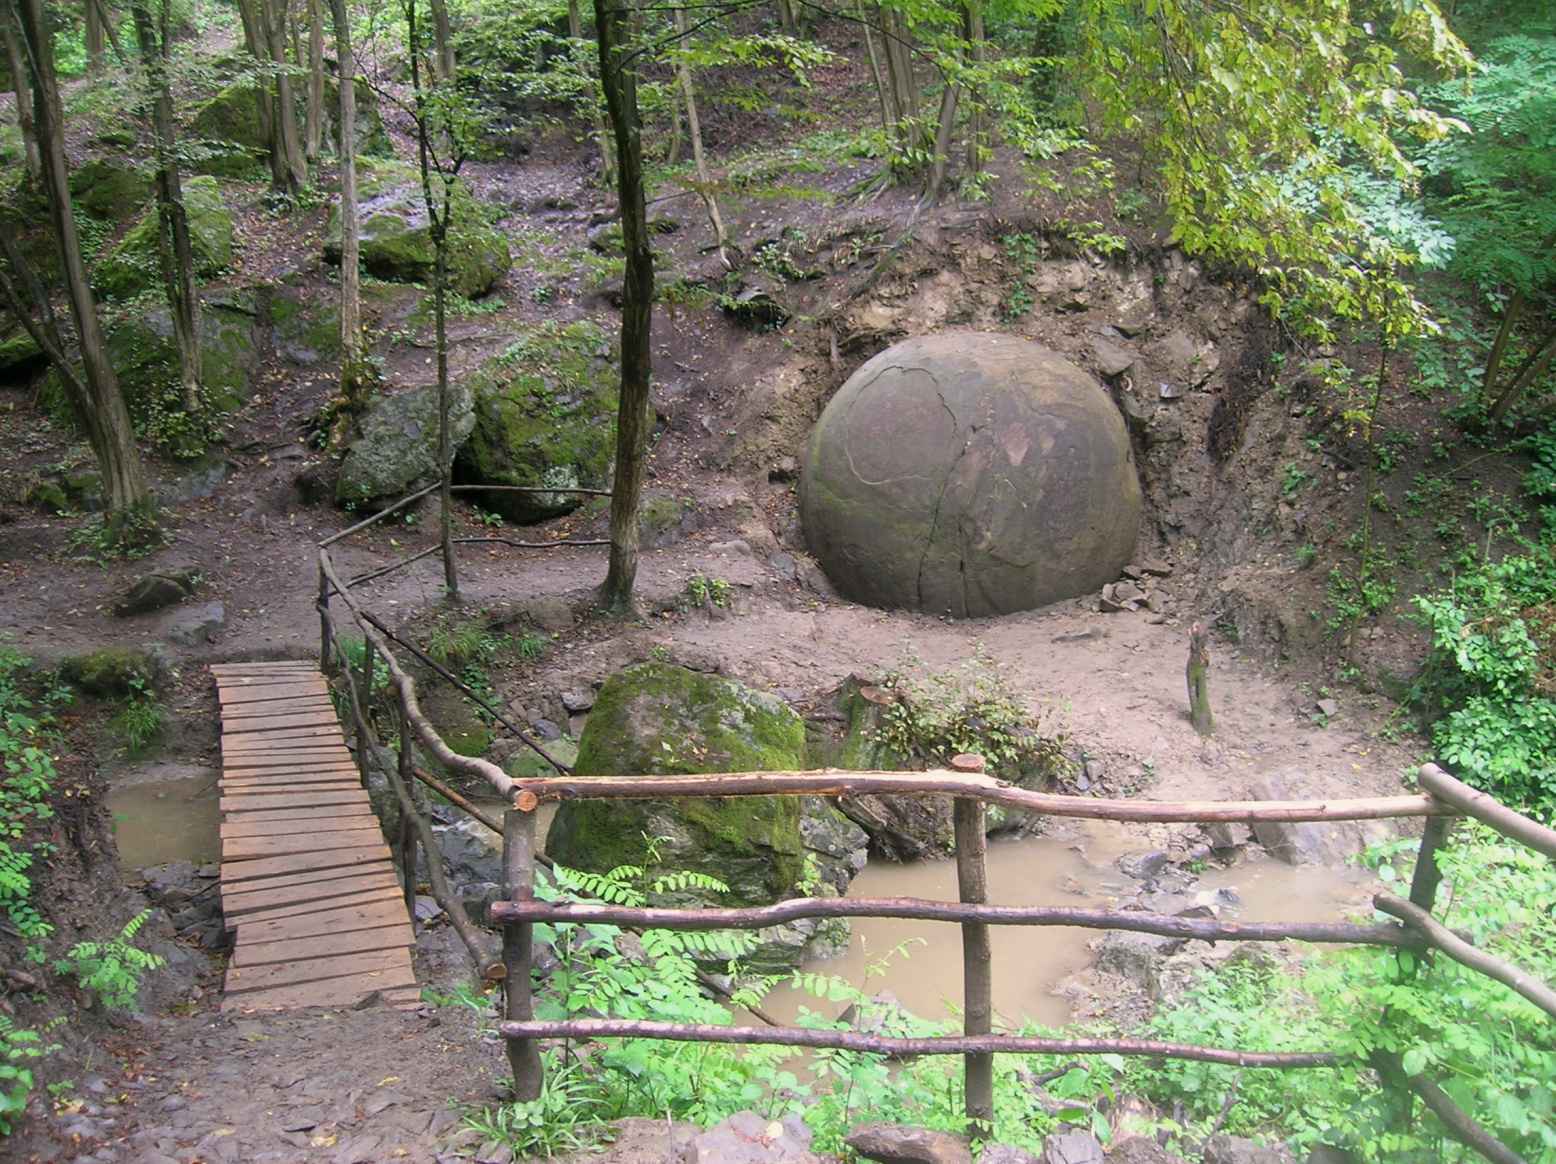 Strange Stone sfære, Vosoko-regionen, Bosnien